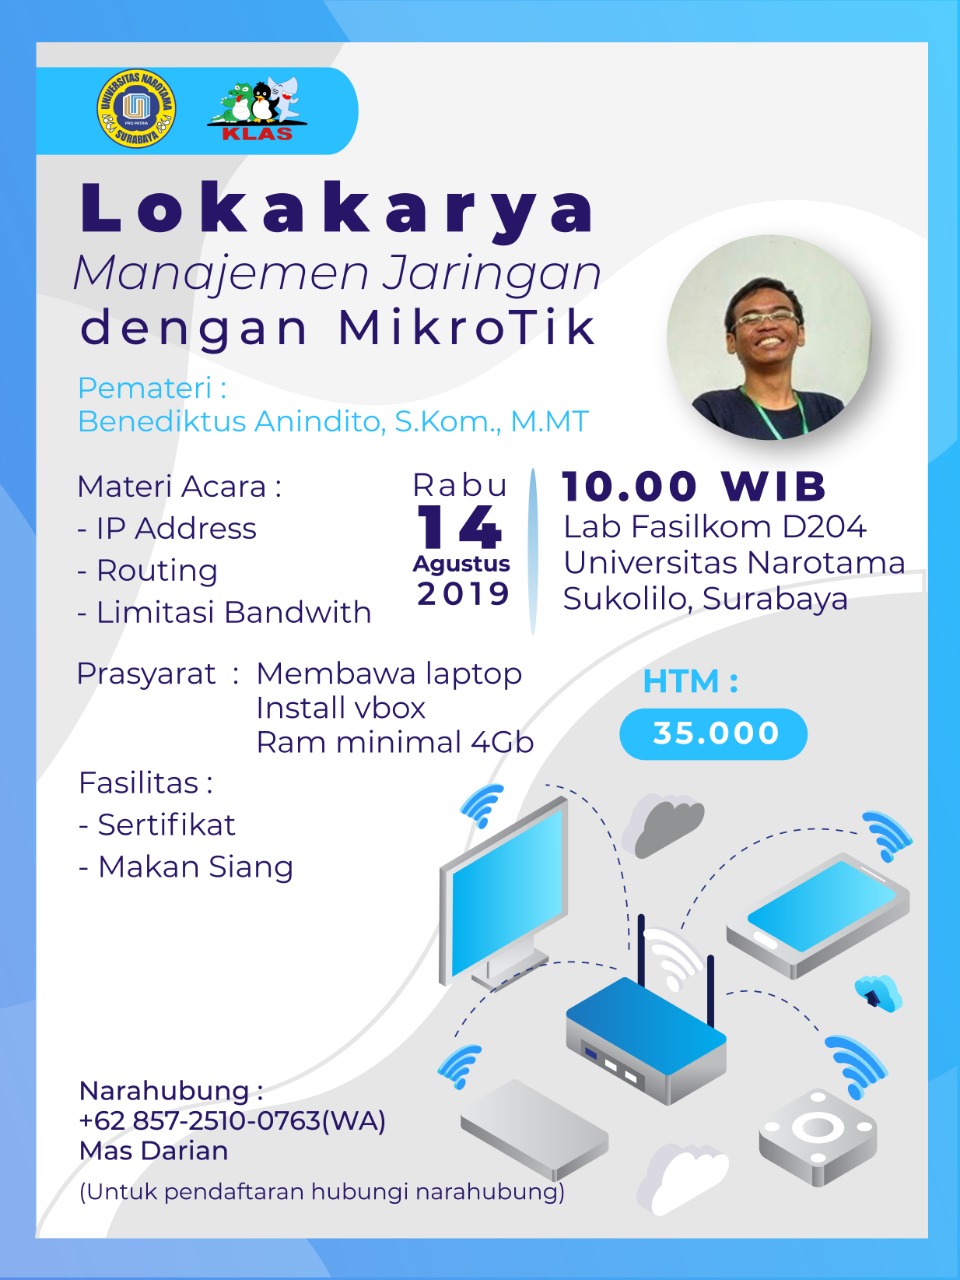 Lokakarya Managemen Jaringan Dengan Mikrotik